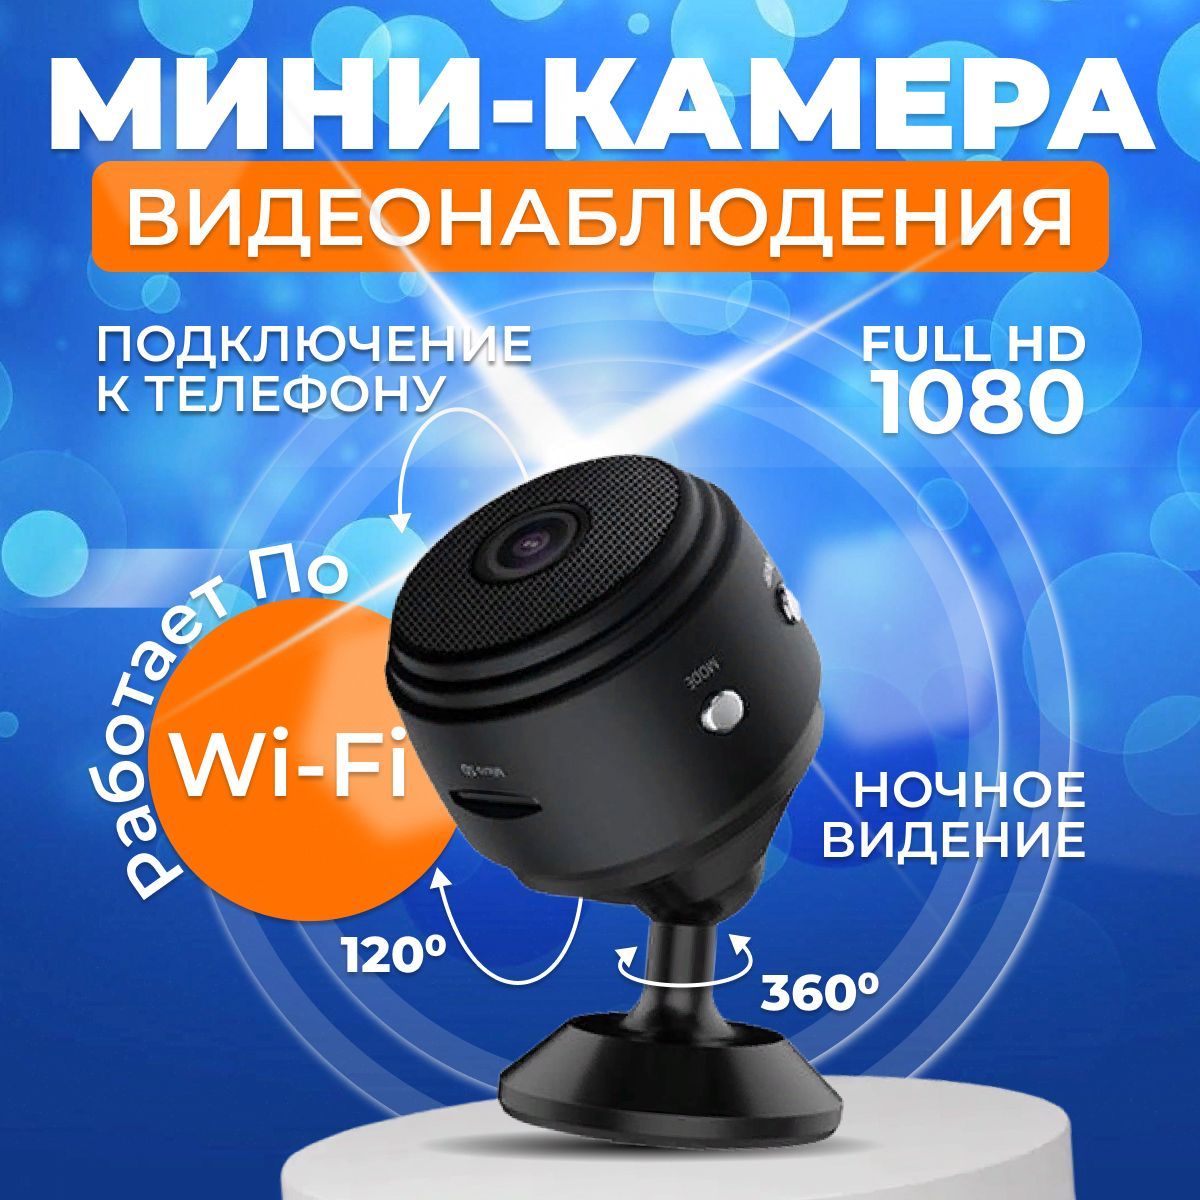 Камера видеонаблюдения BAOBIOKI mini_kamera_a9 1920×1080 Full HD - купить  по низким ценам в интернет-магазине OZON (1297263883)